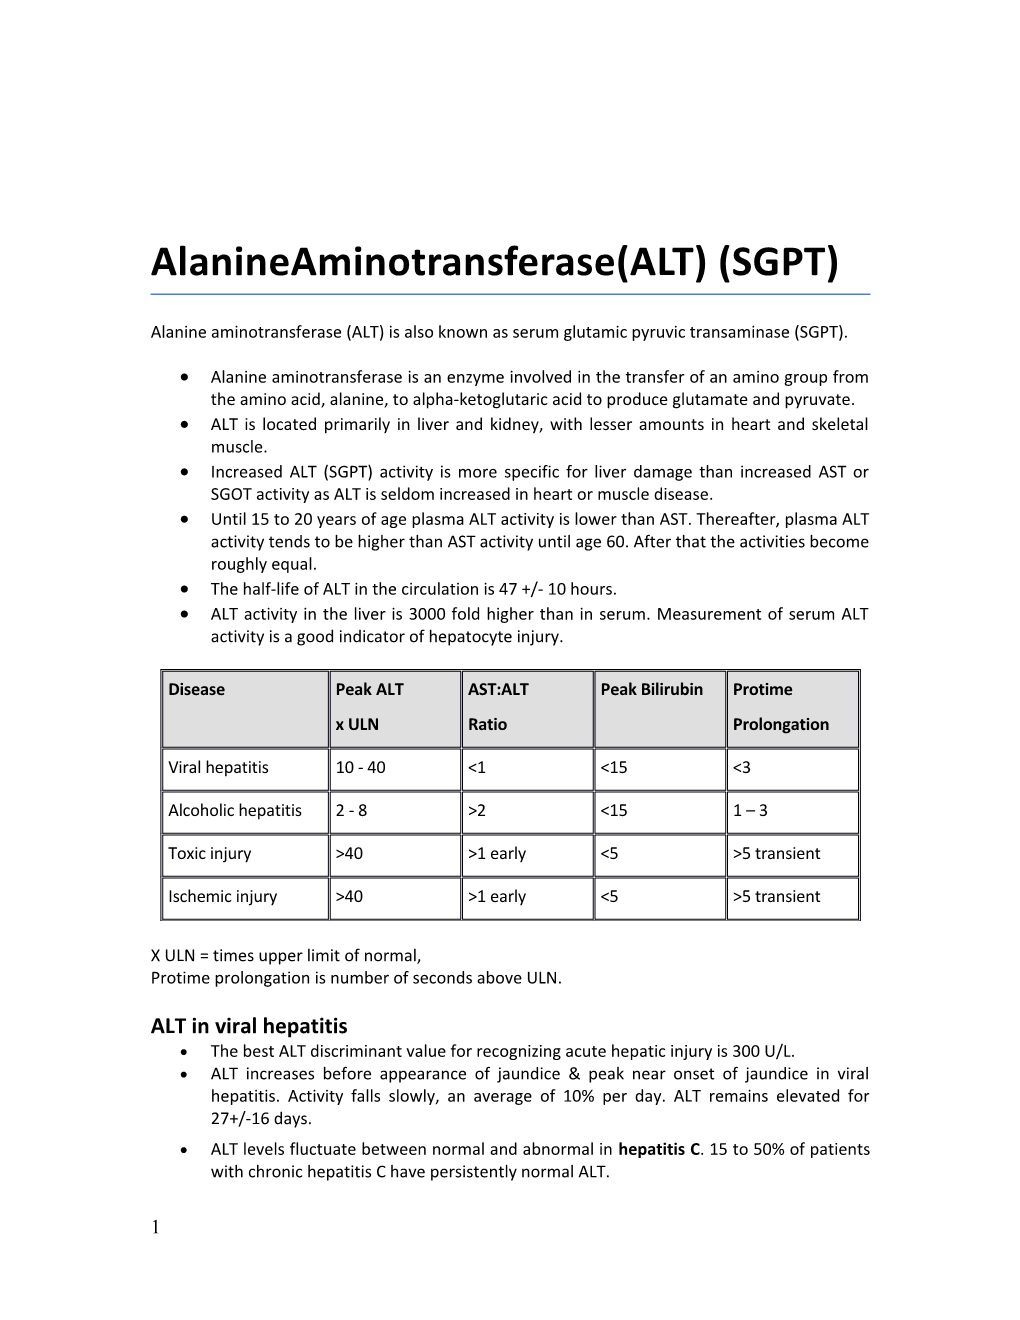 Alanine Aminotransferase (ALT) Is Also Known As Serum Glutamic Pyruvic Transaminase (SGPT)